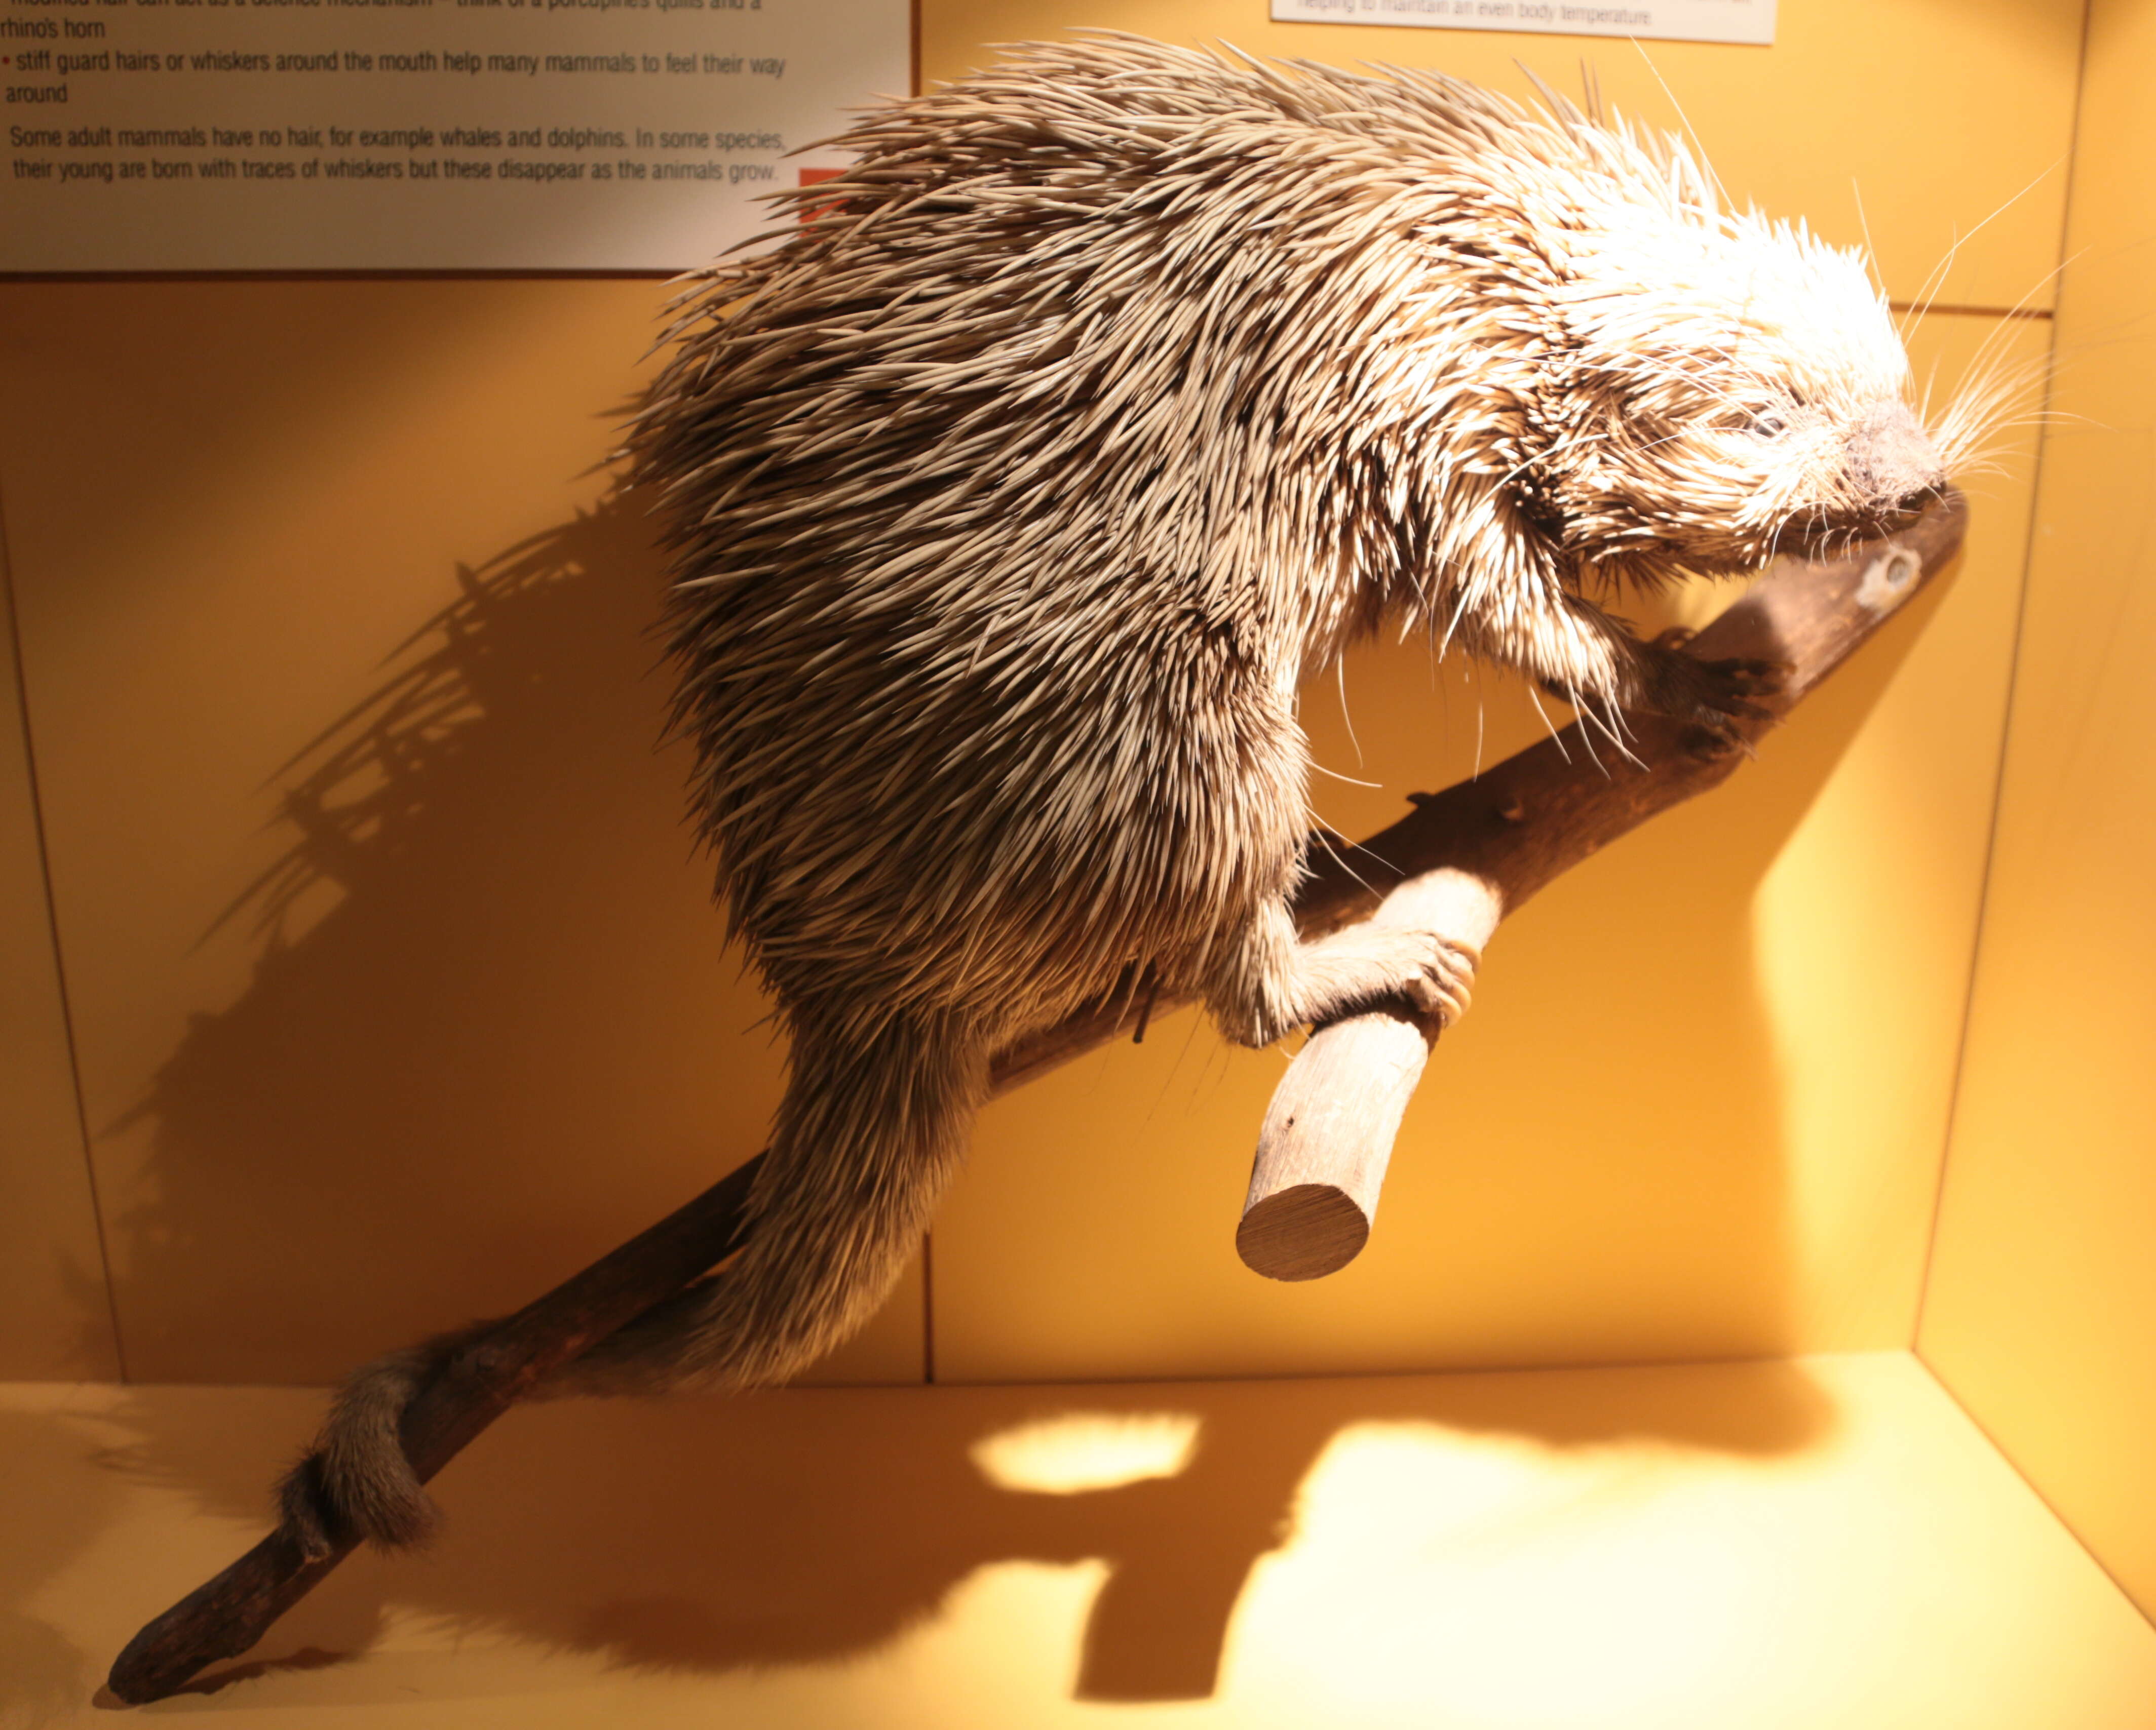 Image of Brazilian Porcupine